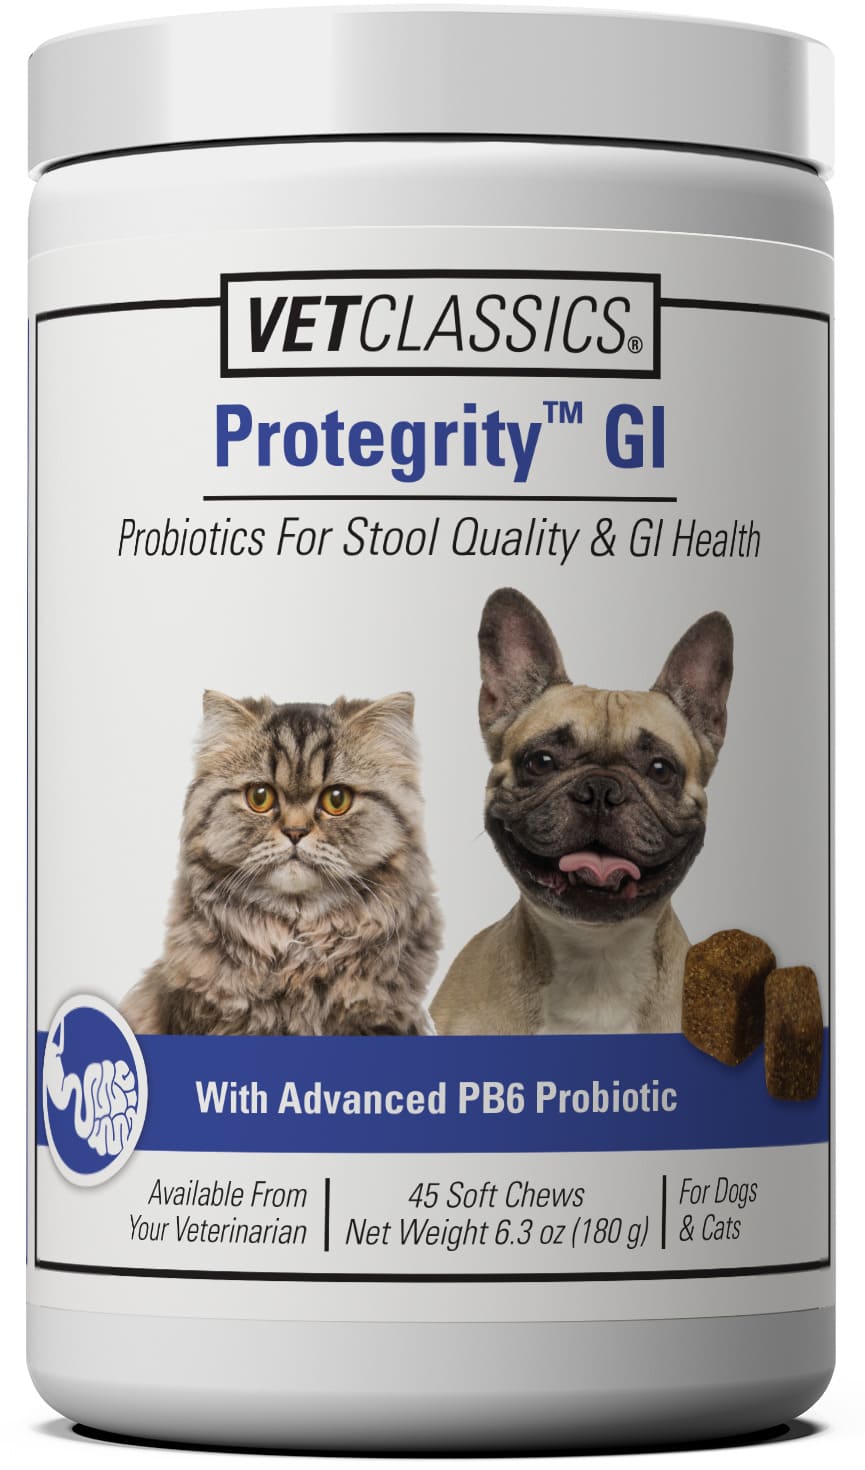 VetClassics Protegrity GI Soft Chews